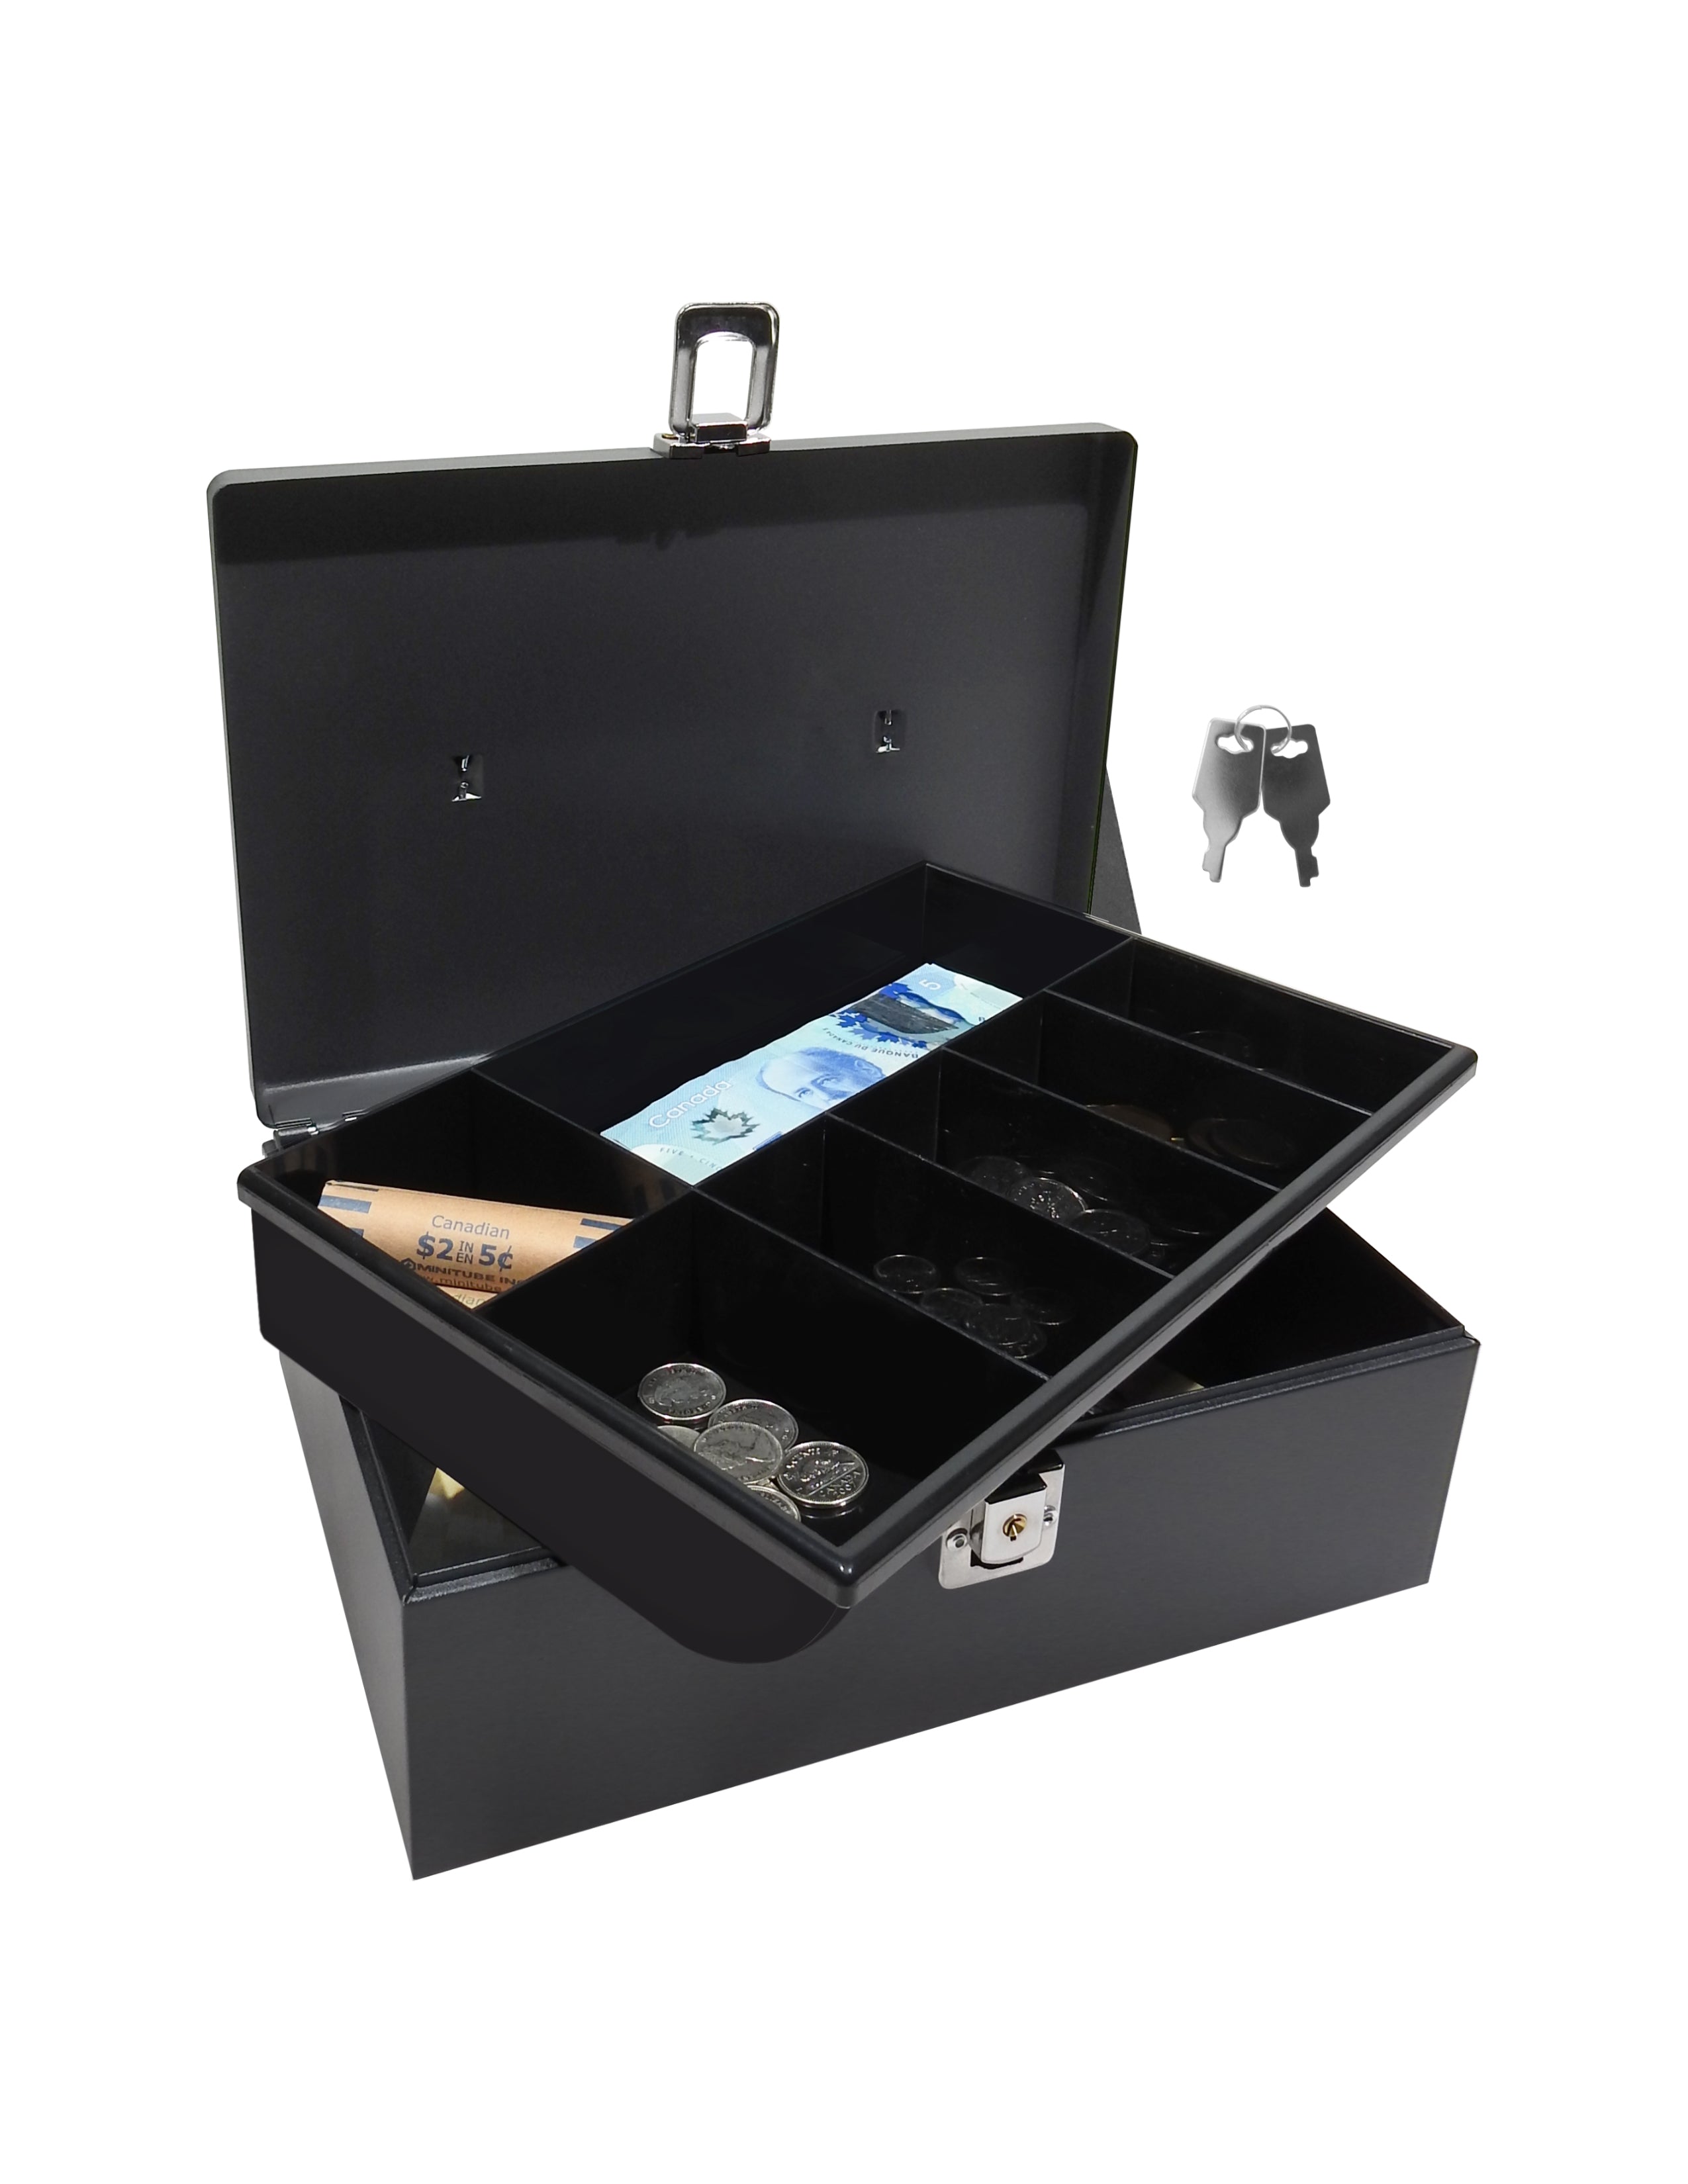 CMCB-280LL /Full-Size Cash Box with Latch Lock